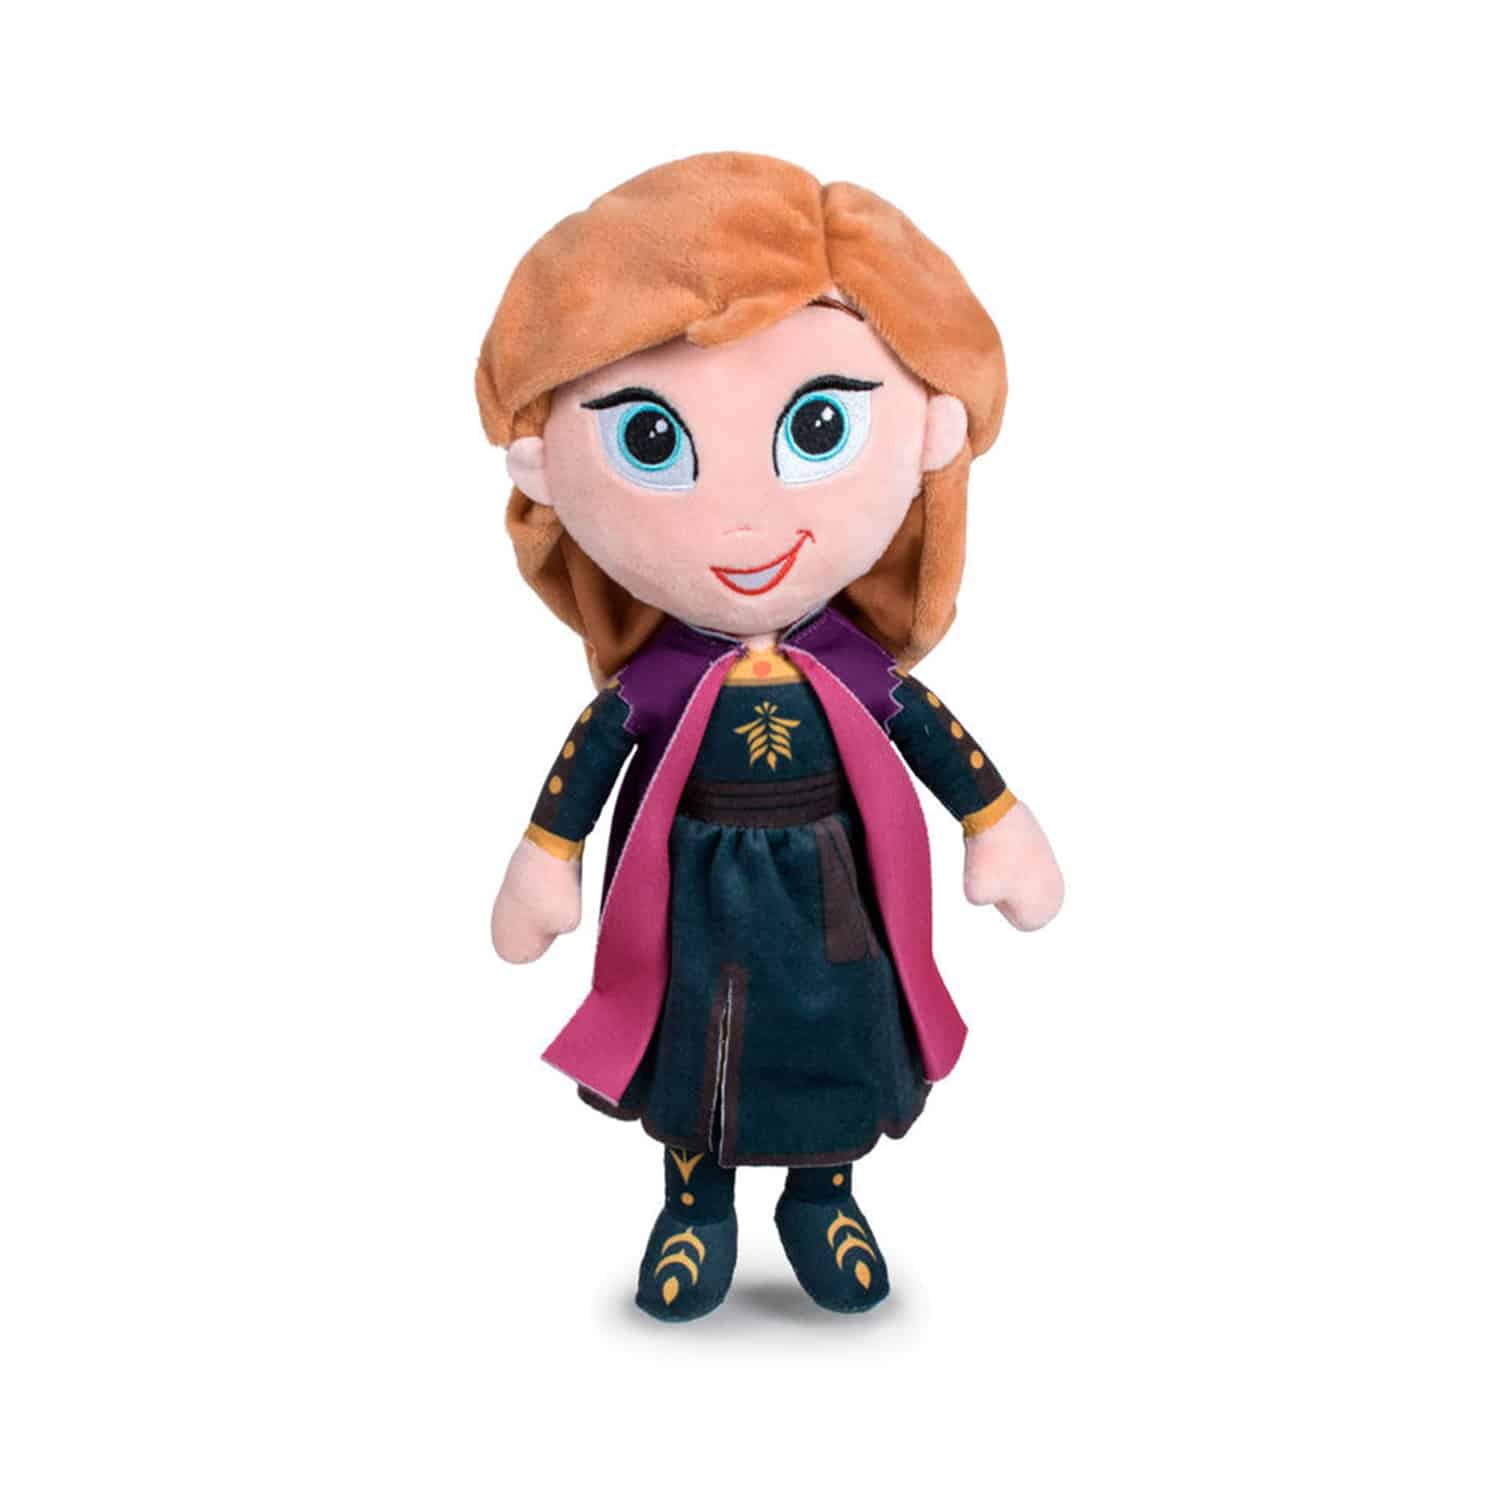 Frozen 2 - Anna Plush Toy